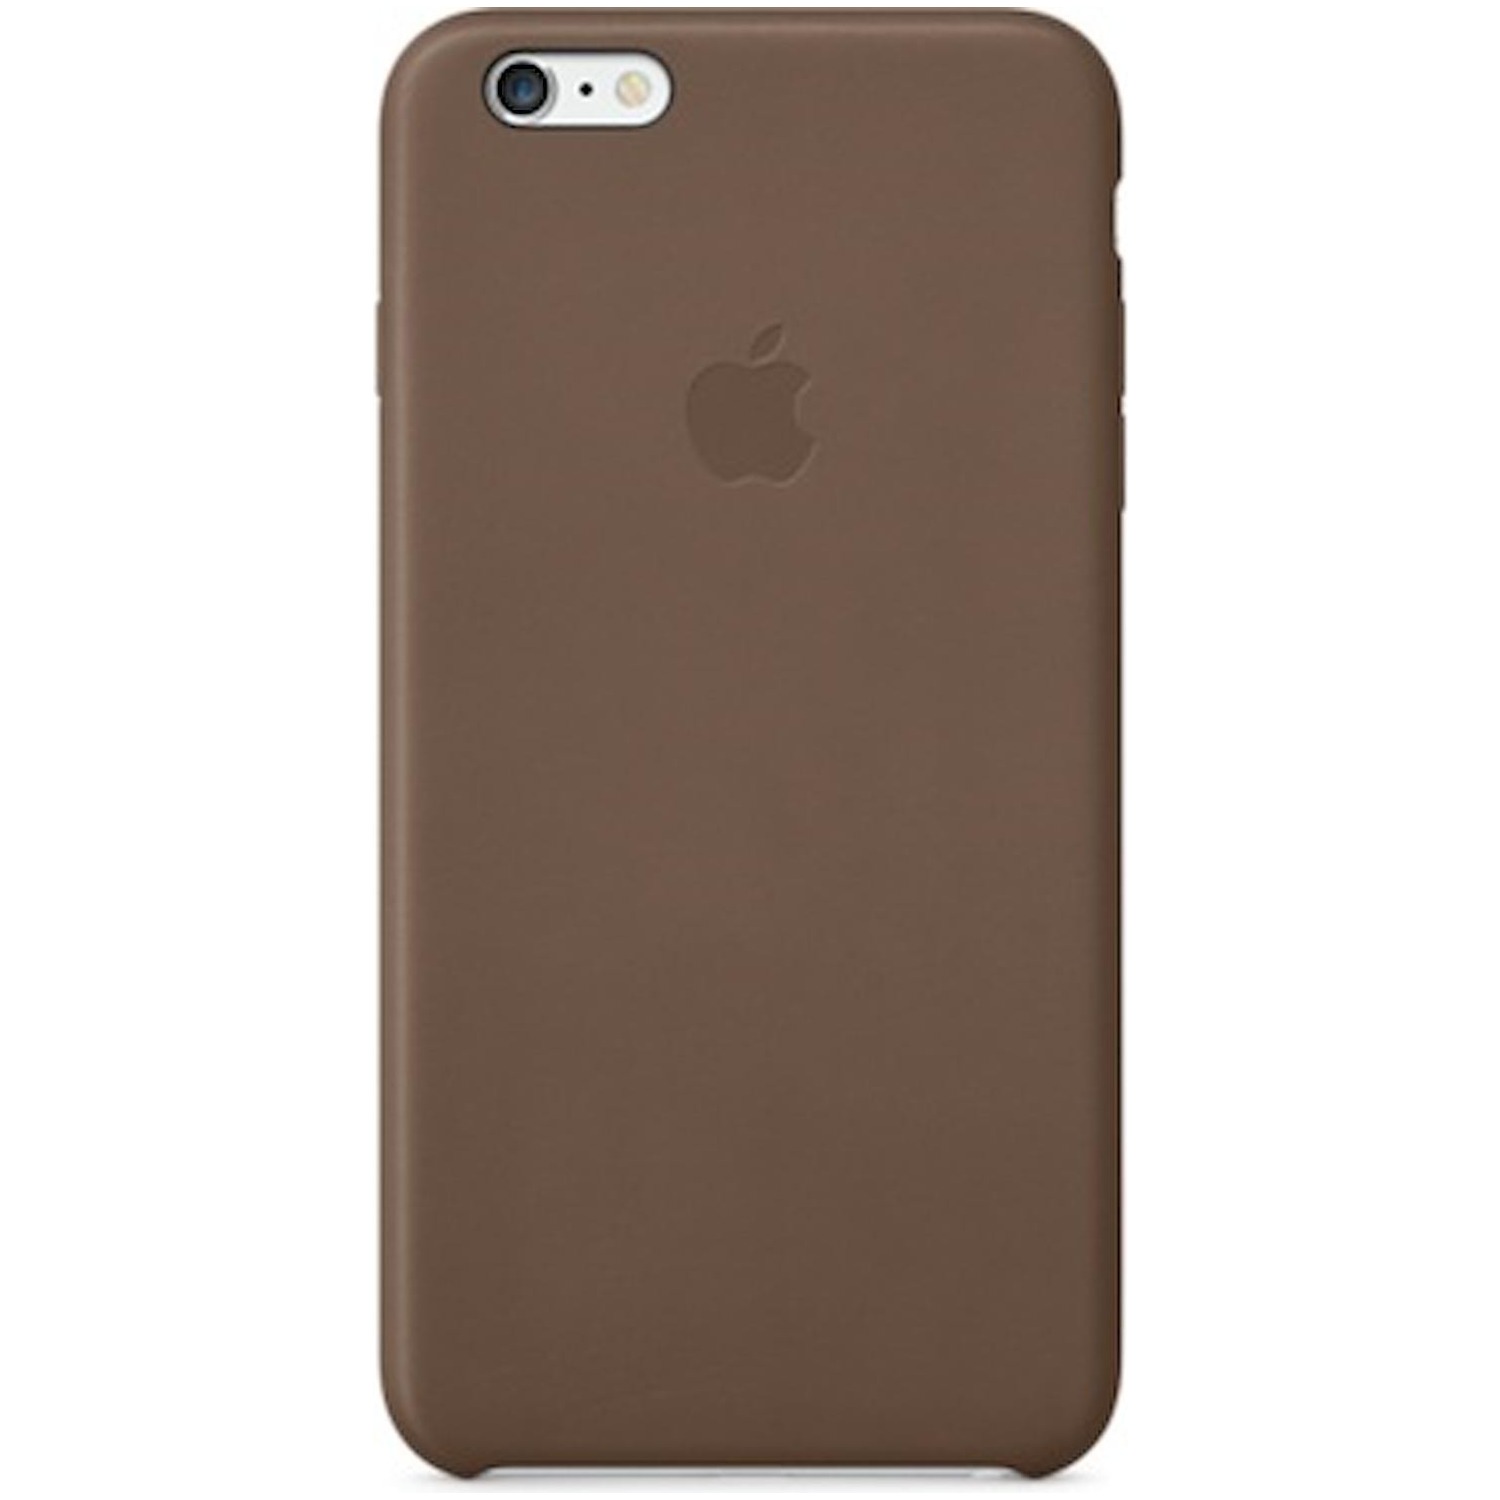 Immagine per Custodia in pelle Apple per iPhone 6 Plus marrone da DIMOStore